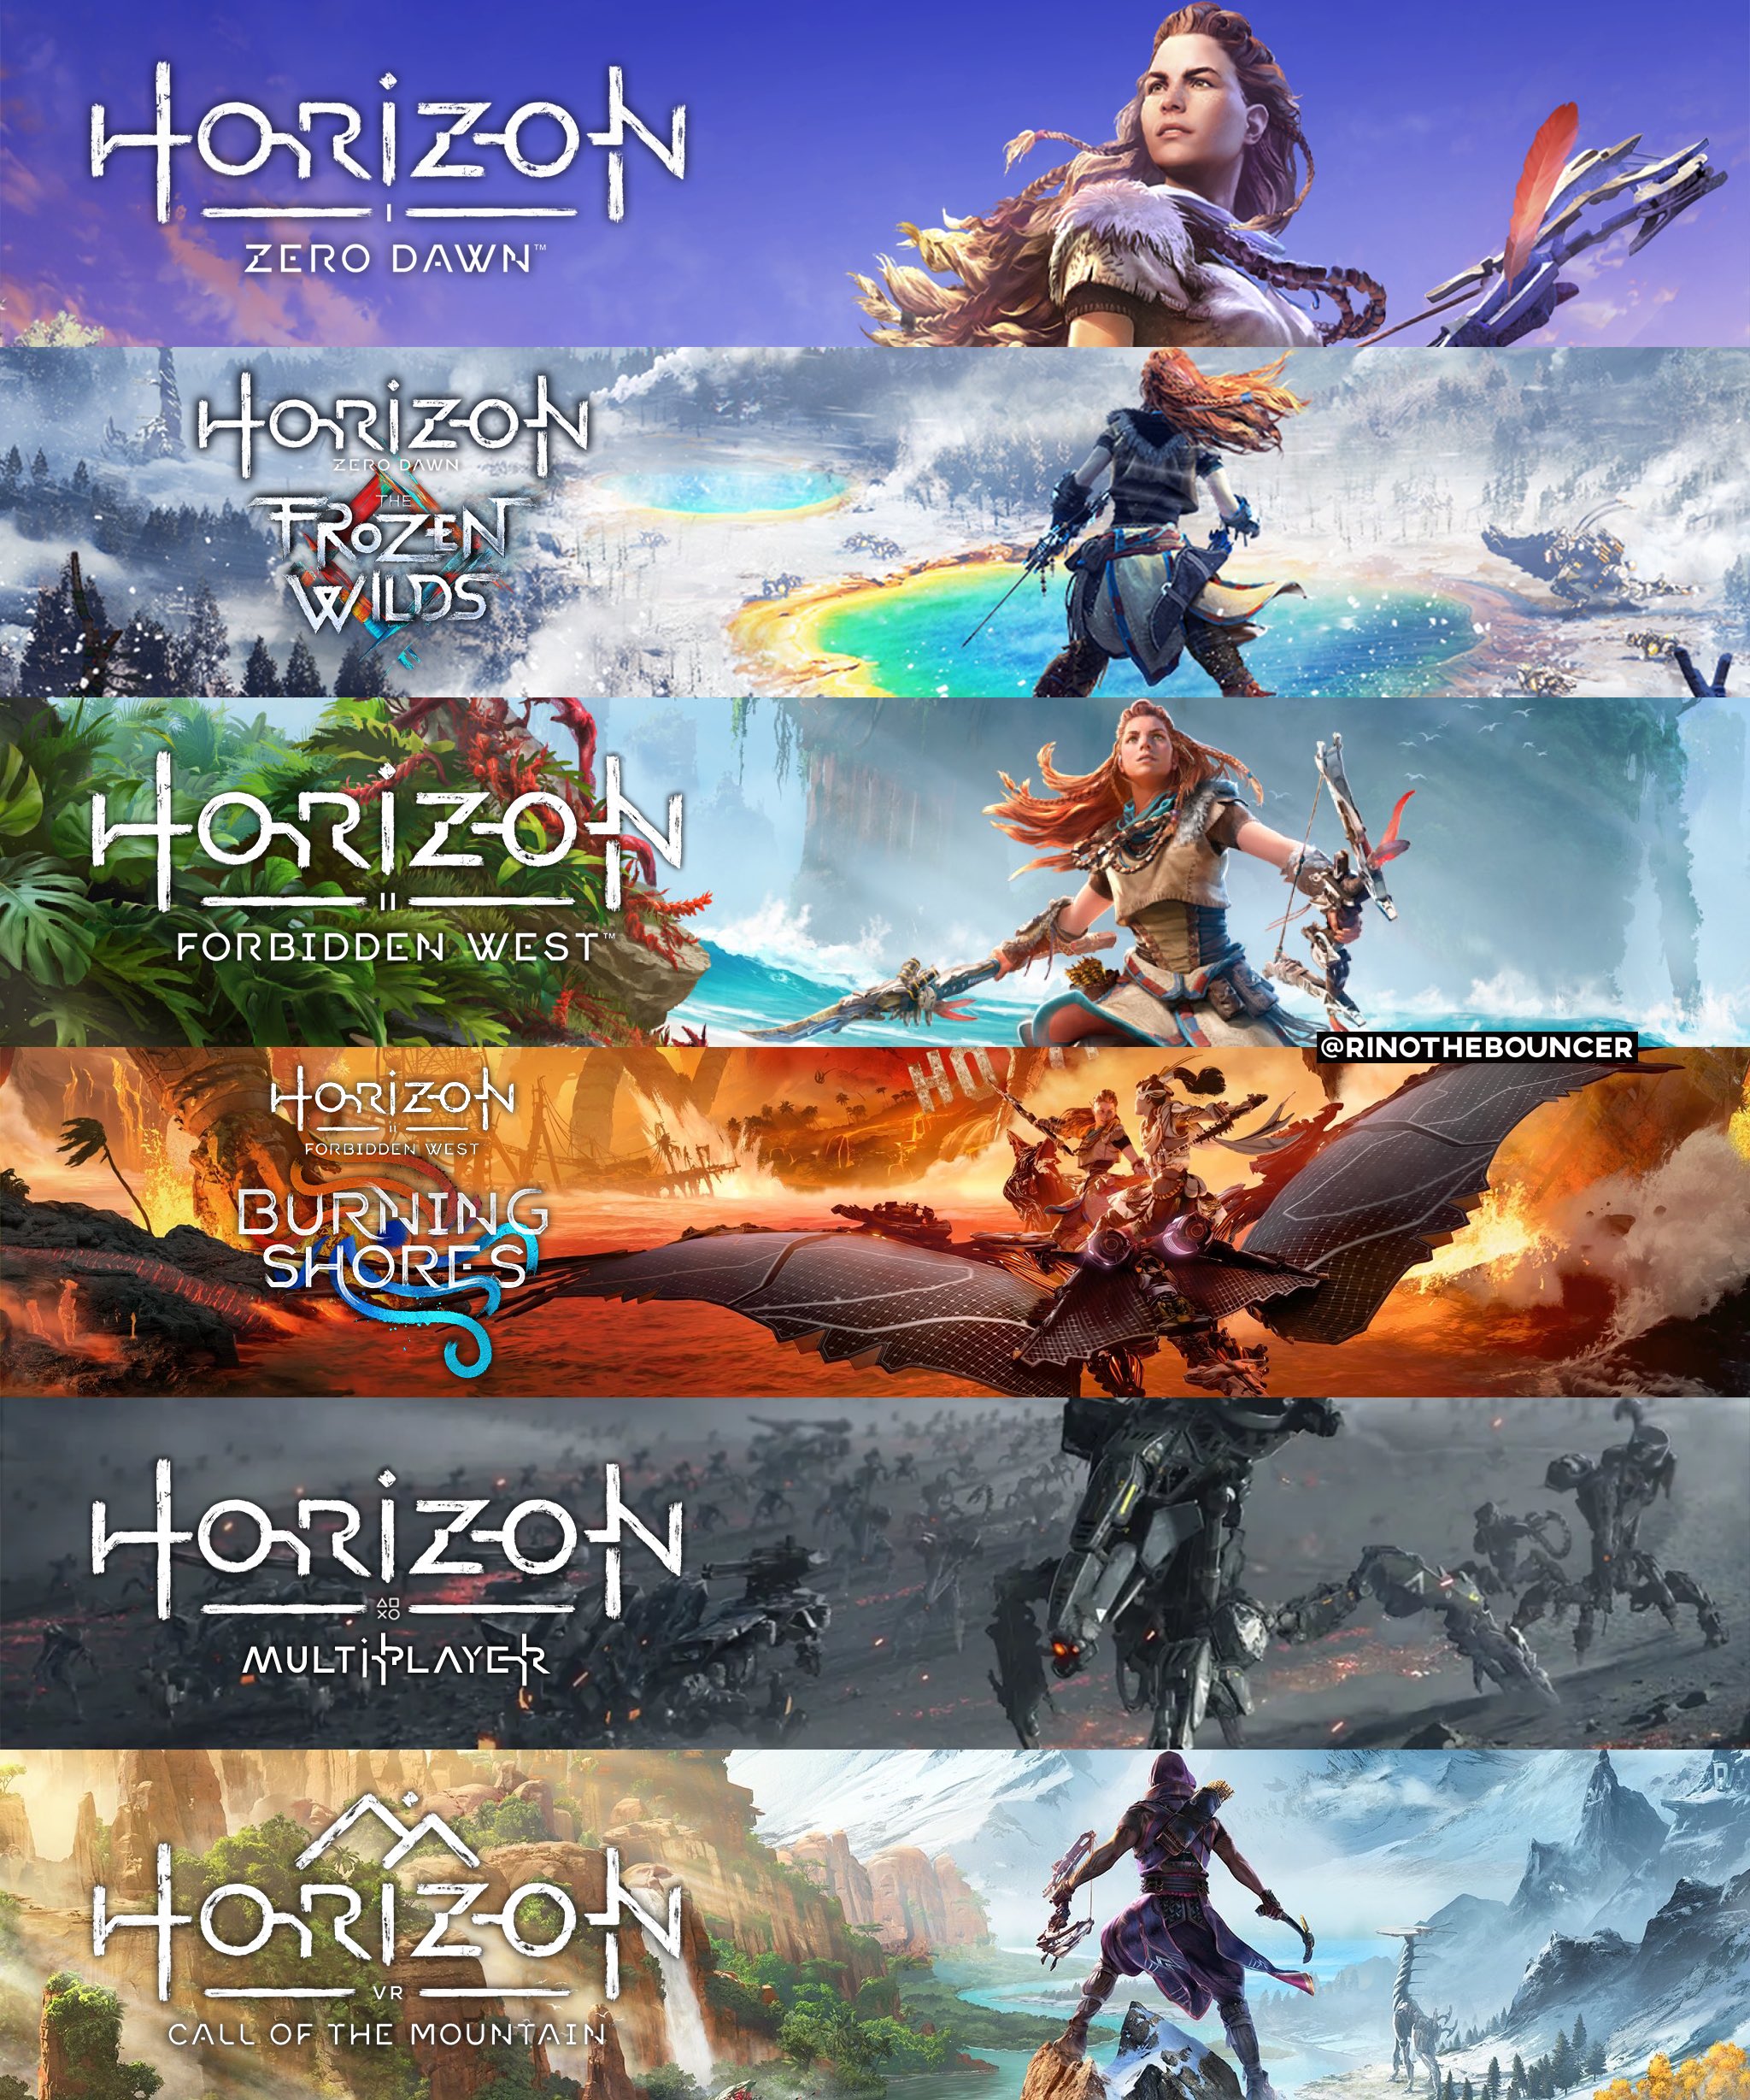 Rino on X: The Horizon franchise is expanding🚀 ✓Horizon Zero Dawn ✓HZD:  Frozen Wilds ✓Horizon Forbidden West ✓HFW: Burning Shores ✓Horizon:  Multiplayer ✓Horizon: Call of the Mountain ✓Horizon III ✓Horizon: External  Project